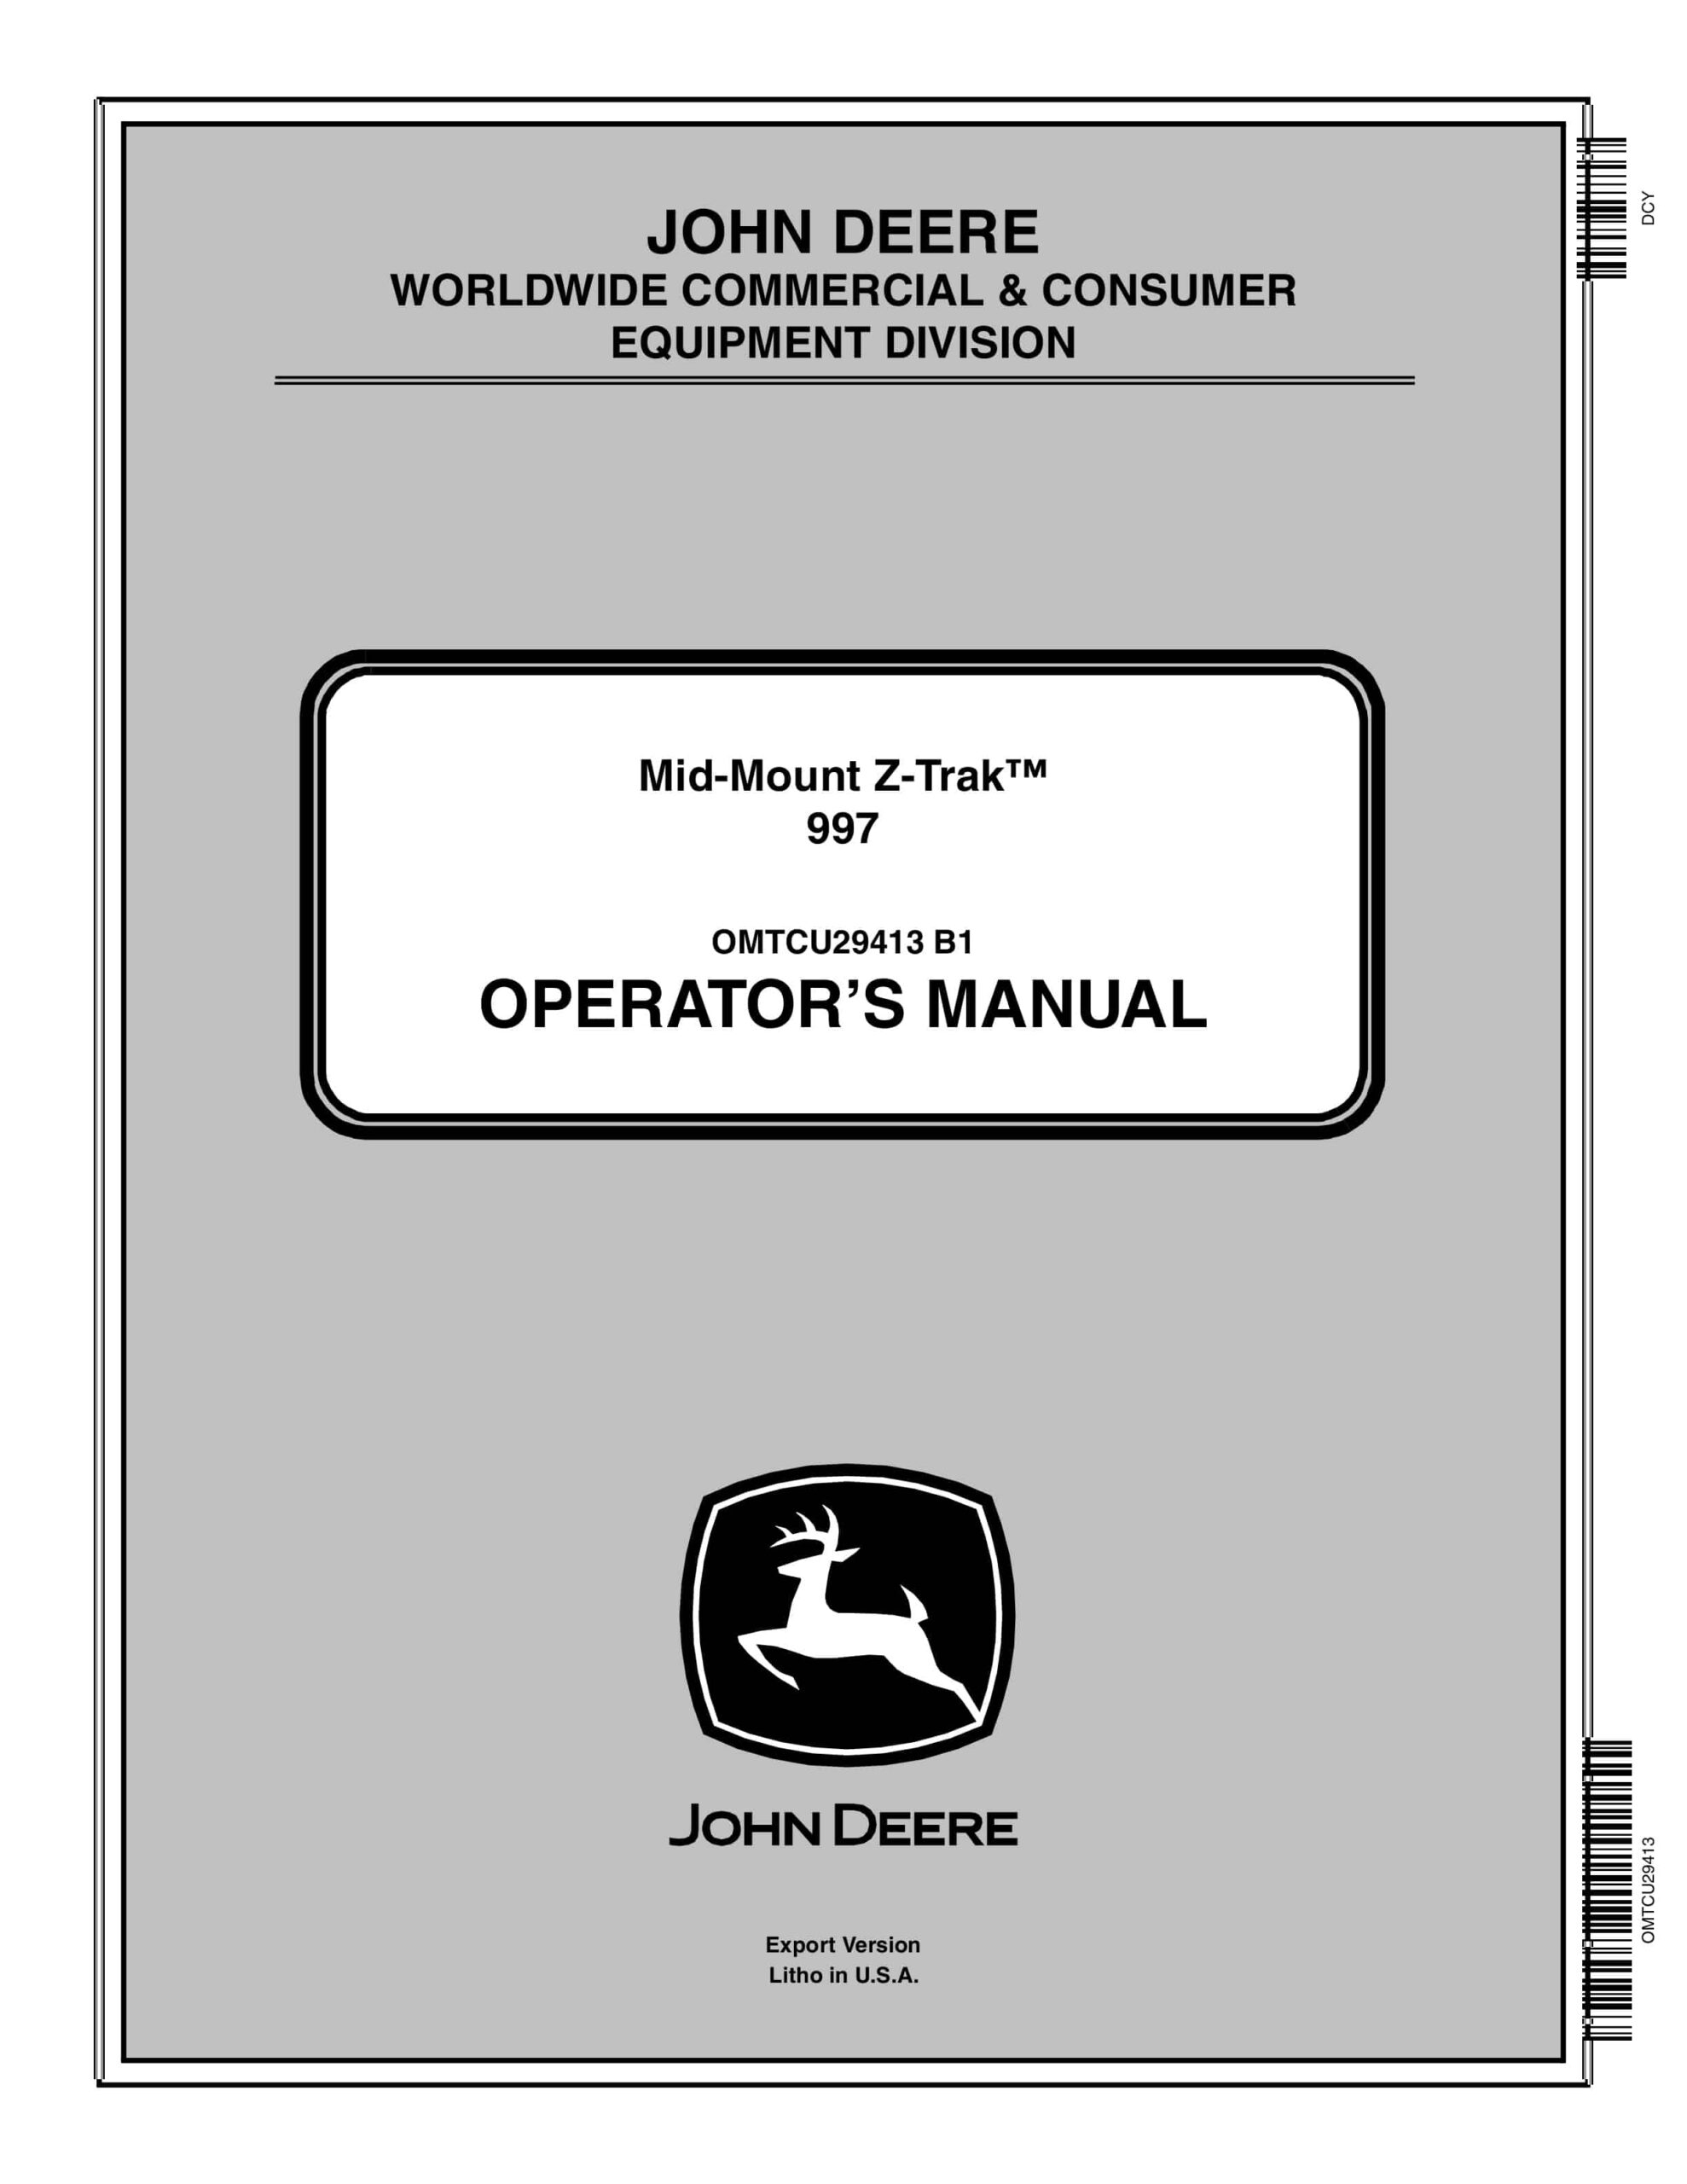 John Deere 997 Mid-Mount Z-Trak Operator Manual OMTCU29413-1